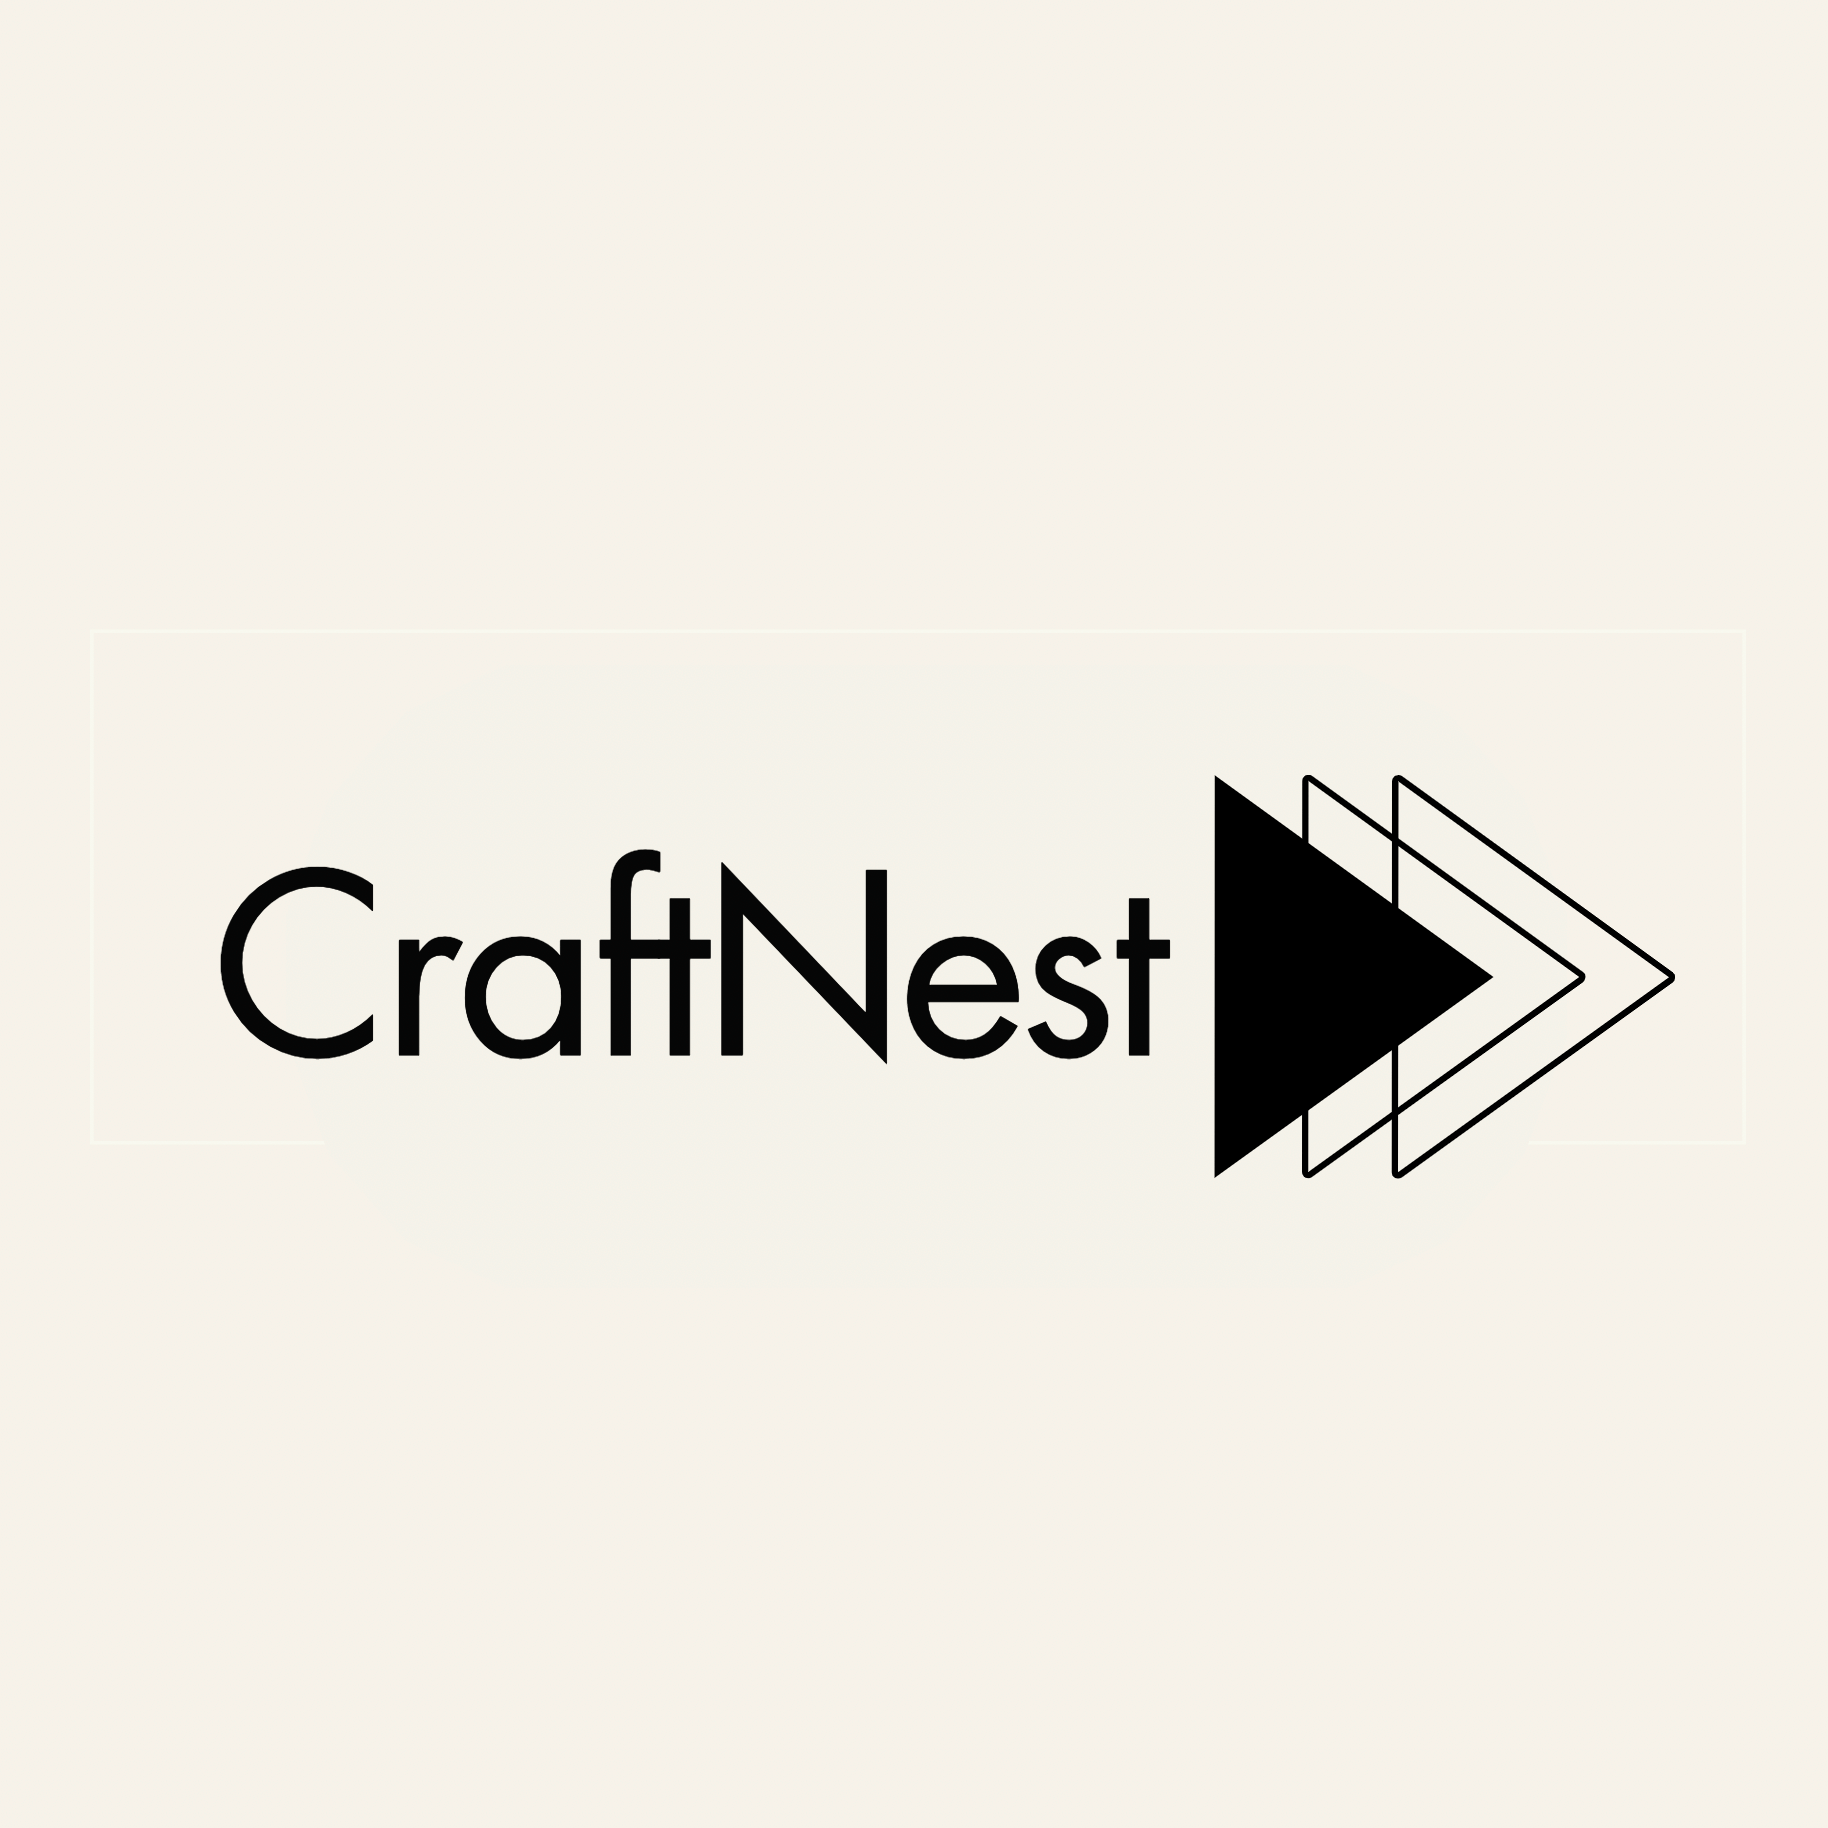 CraftNest